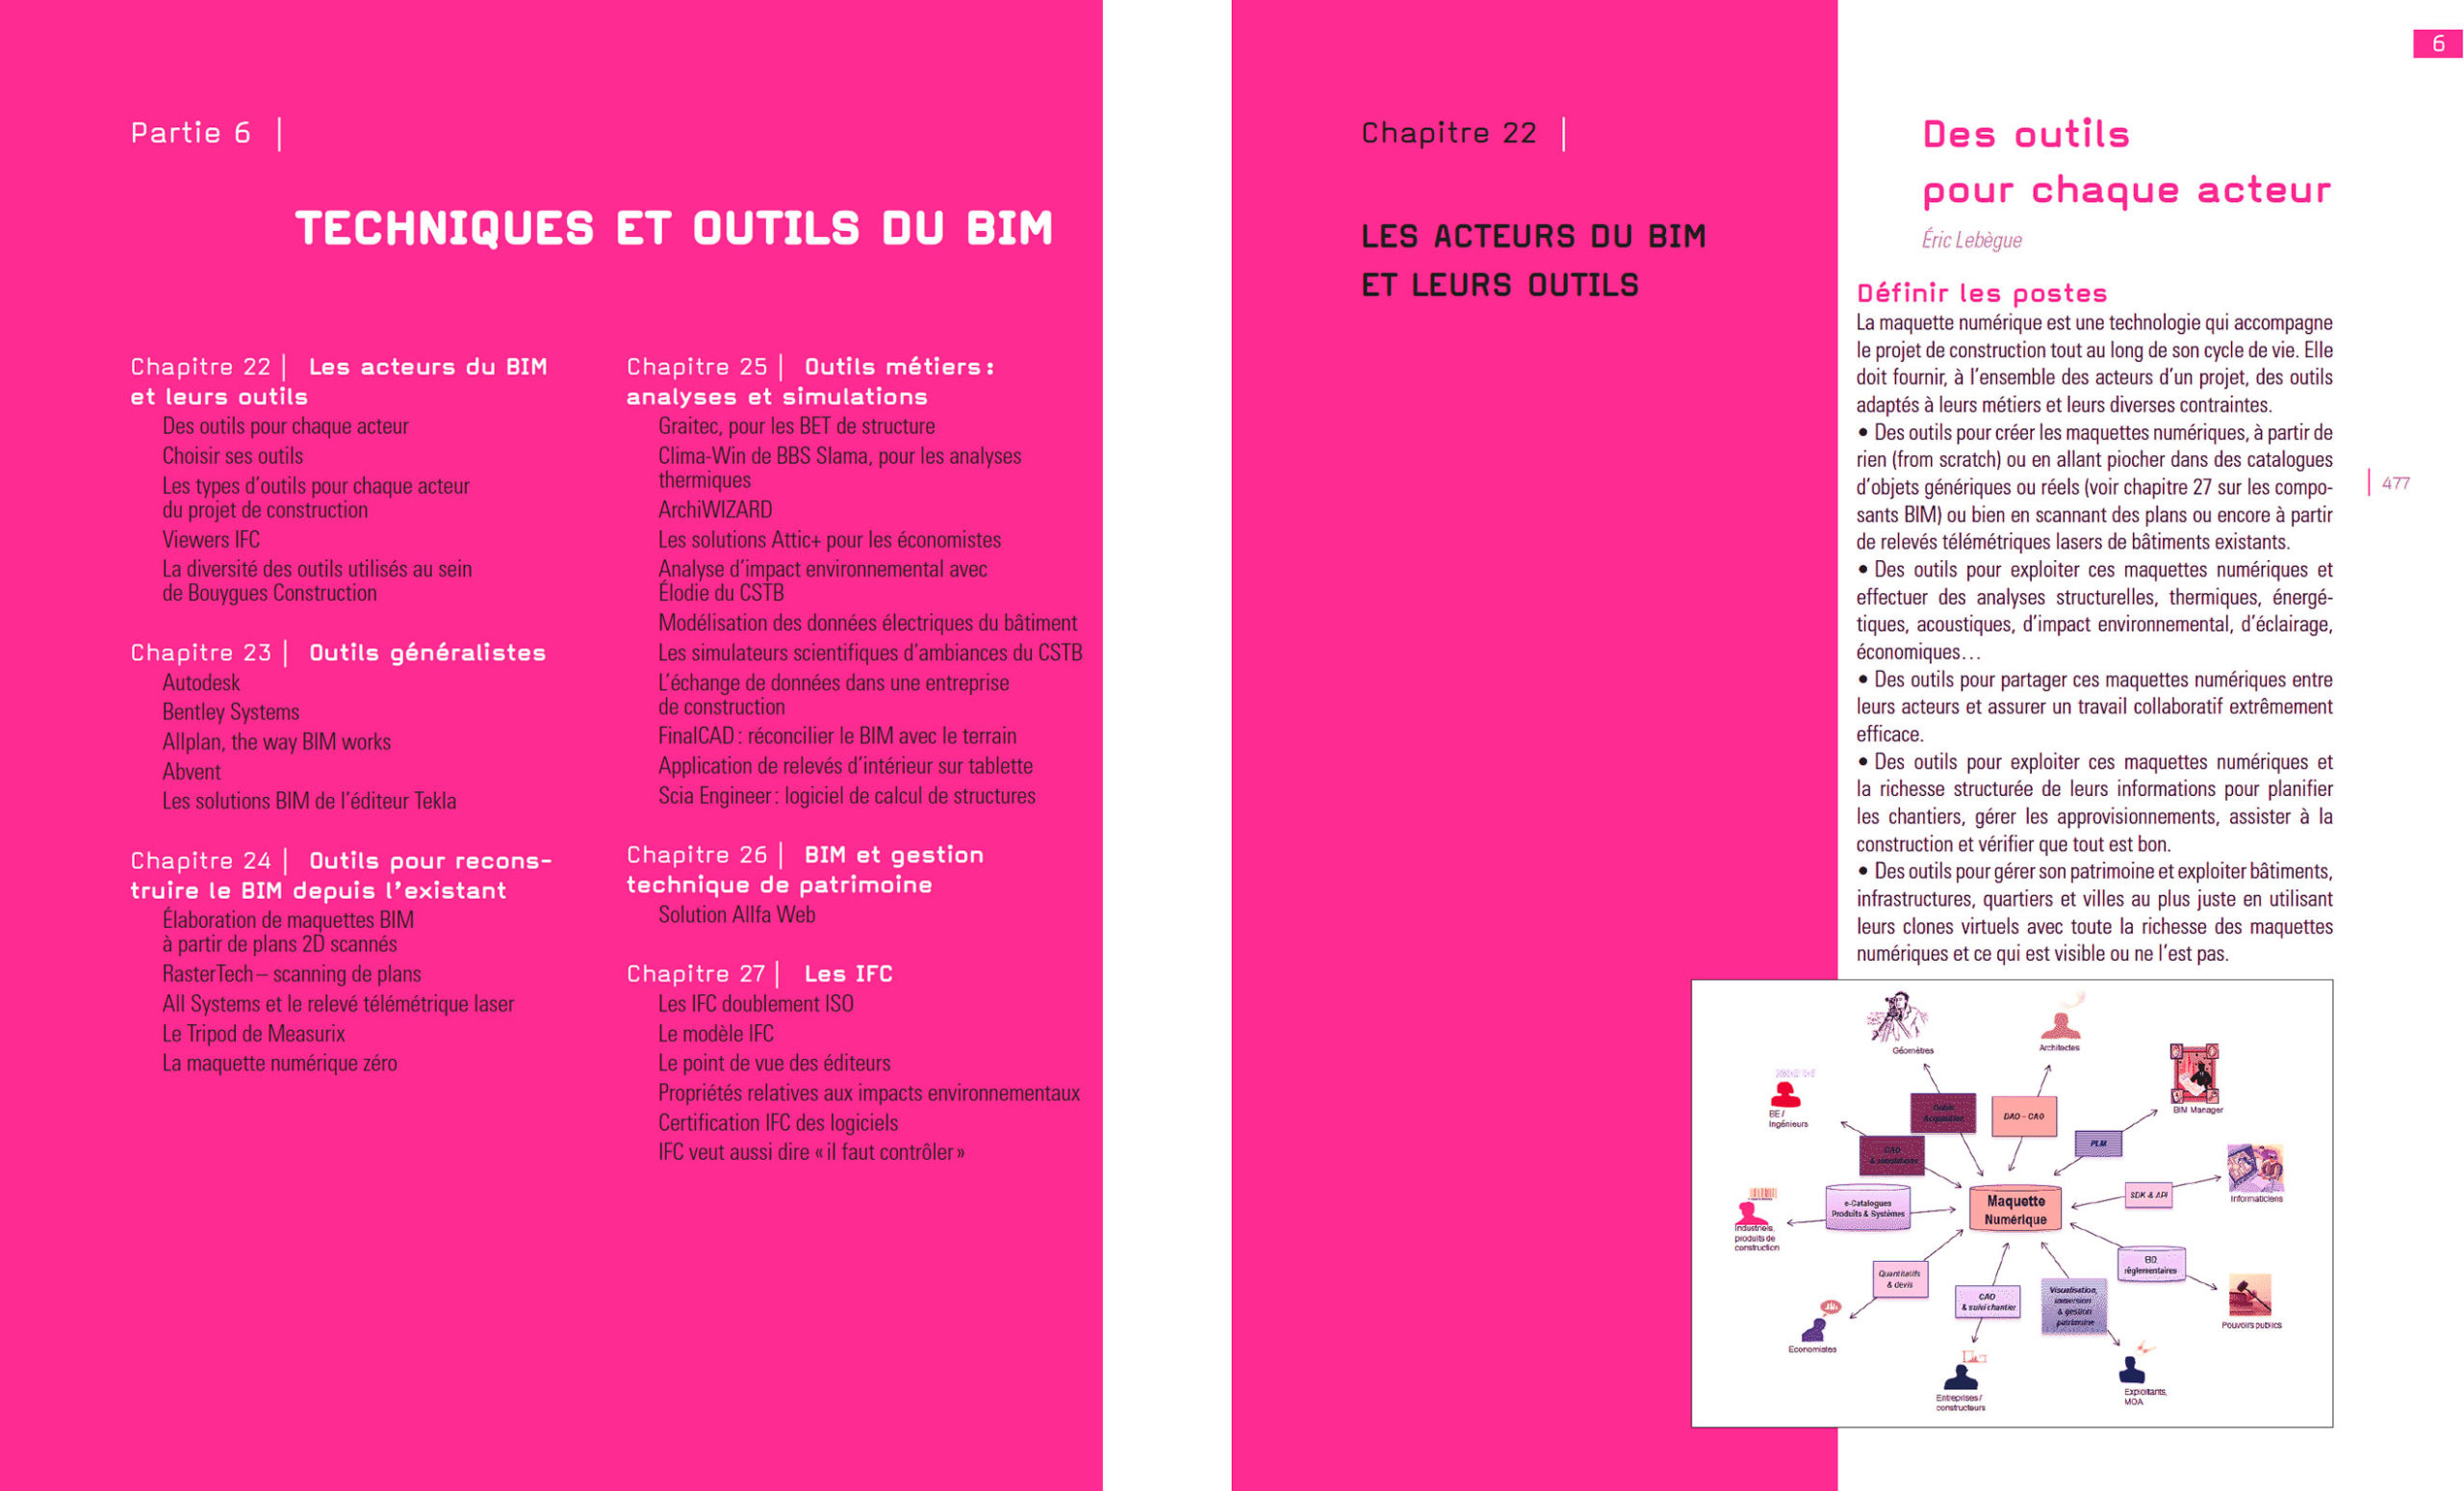 Edition, Eyrolles, BIM, Livre, Pages 2